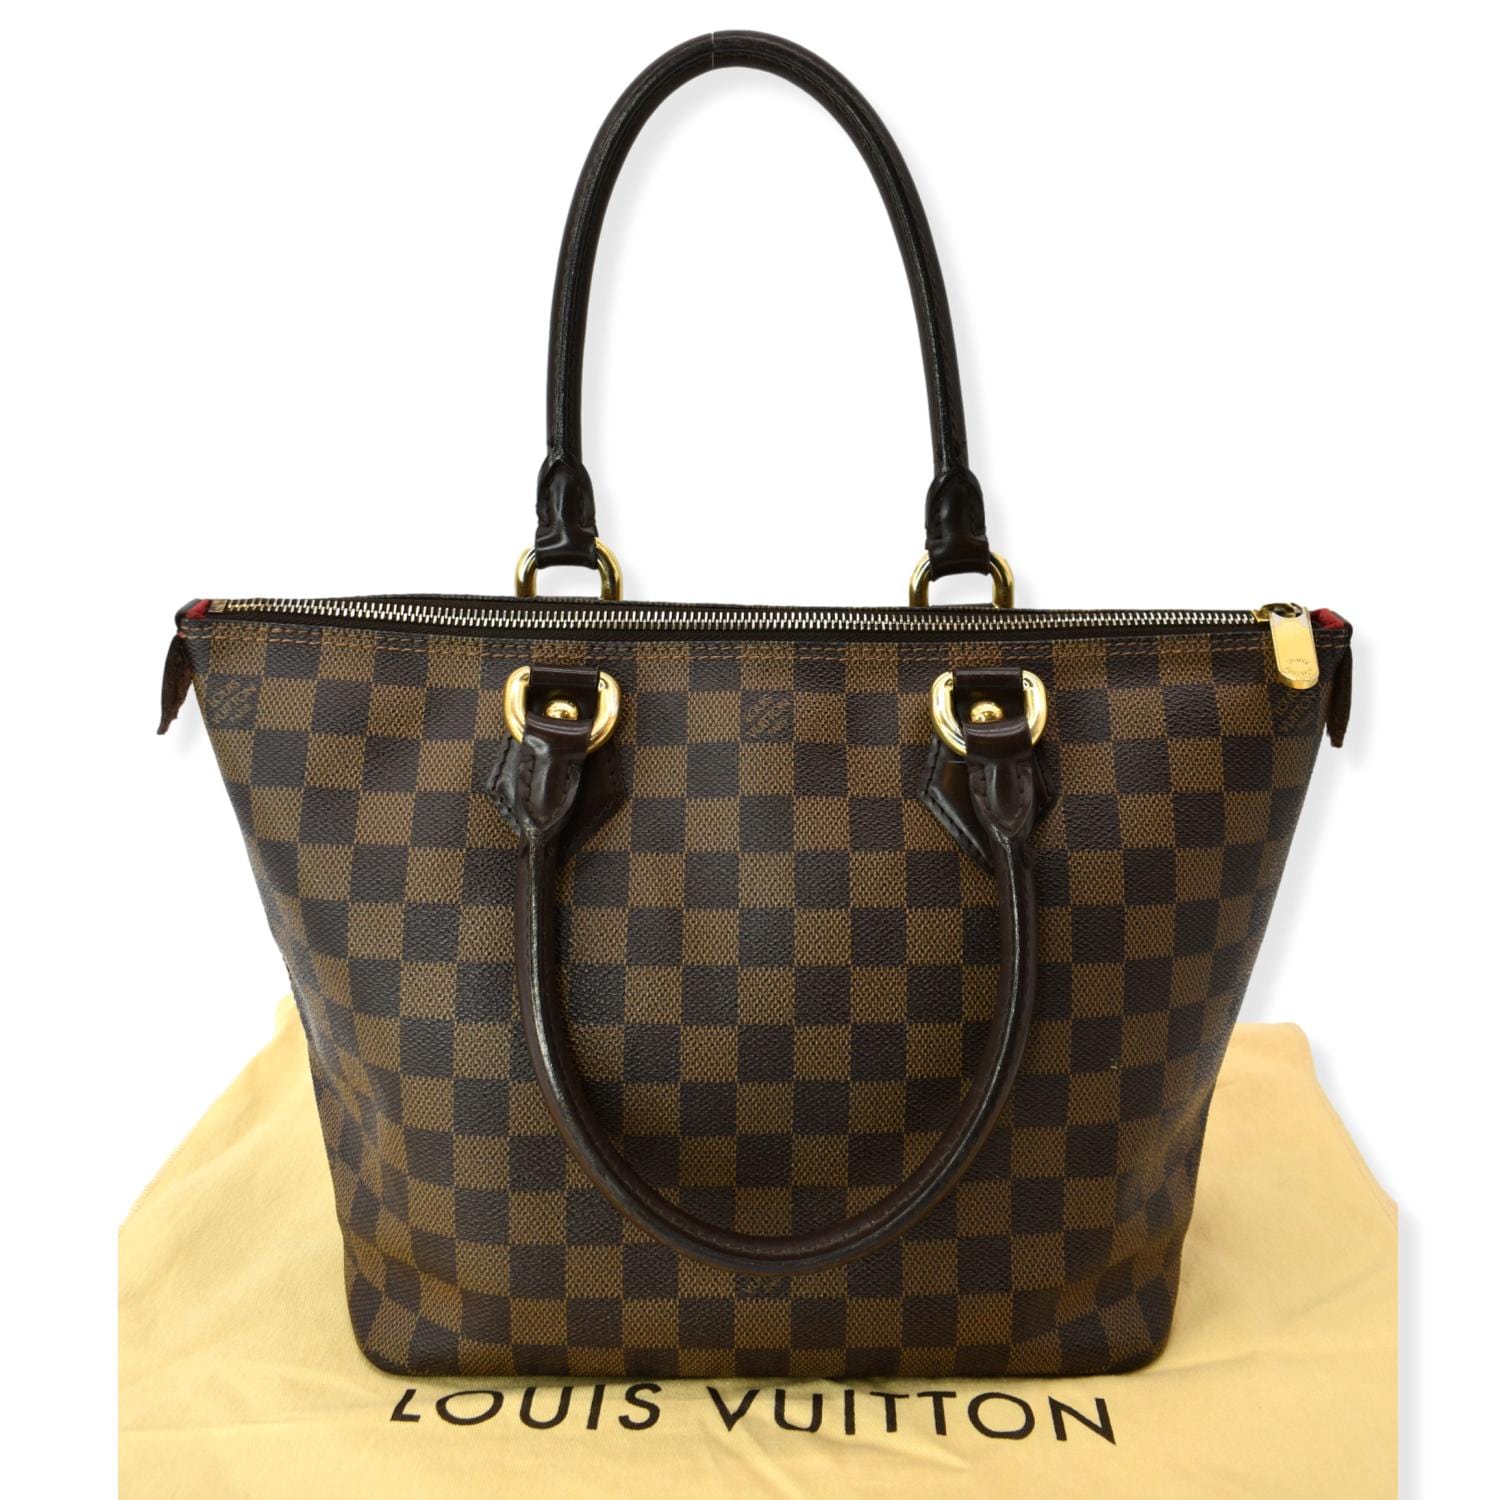 Louis Vuitton, Bags, Louis Vuitton Damier Azur Saleya Pm Tote